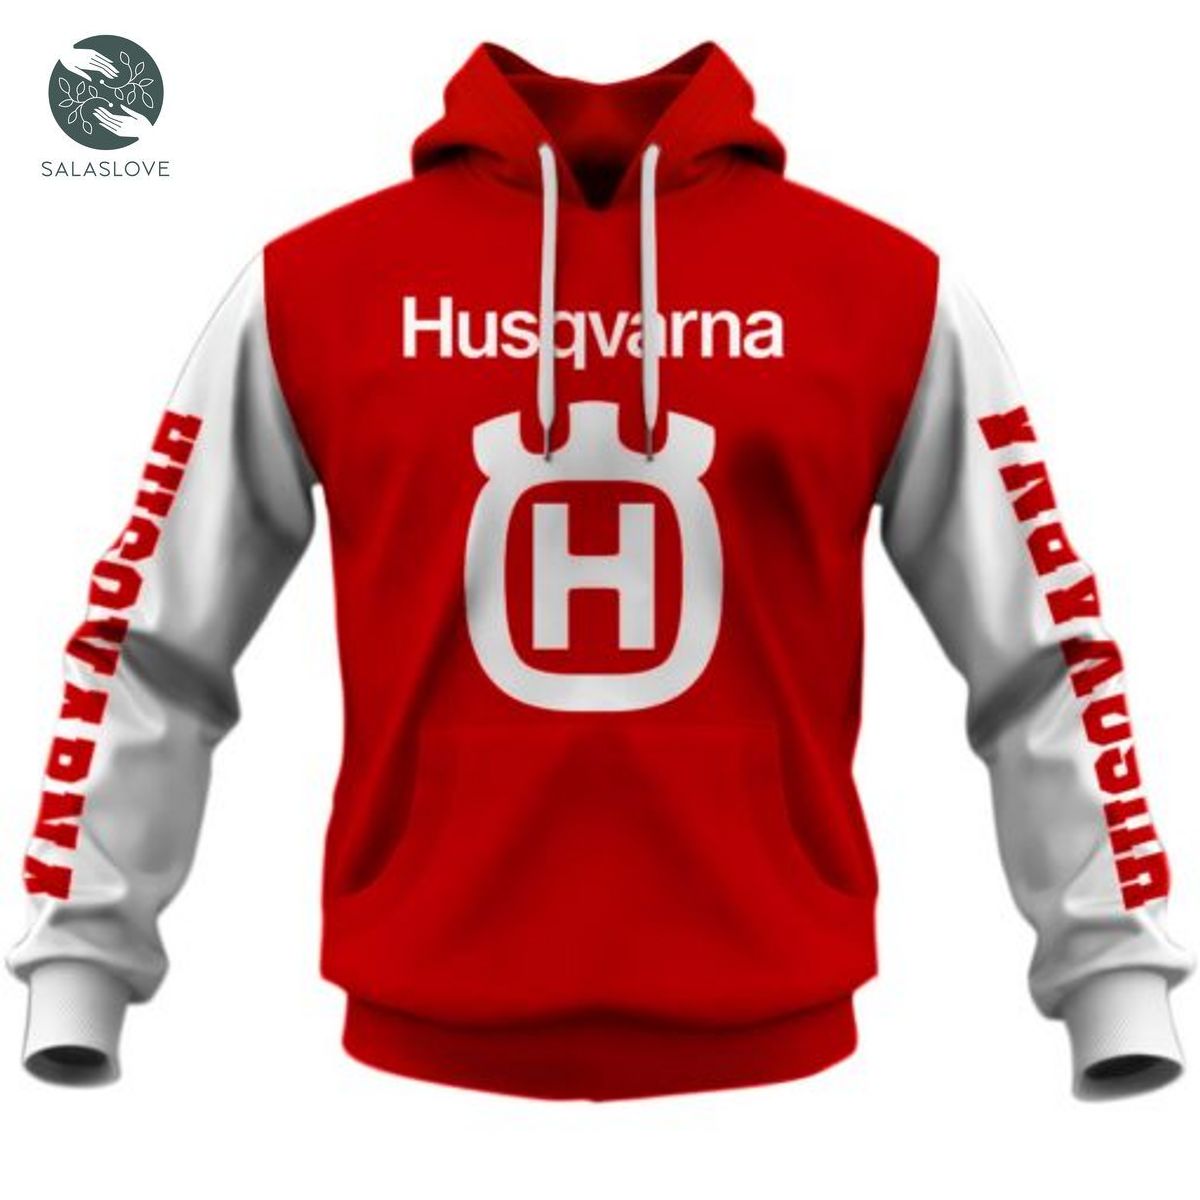 Vintage Style Red Husqvarna Motocross Jersey Hoodie